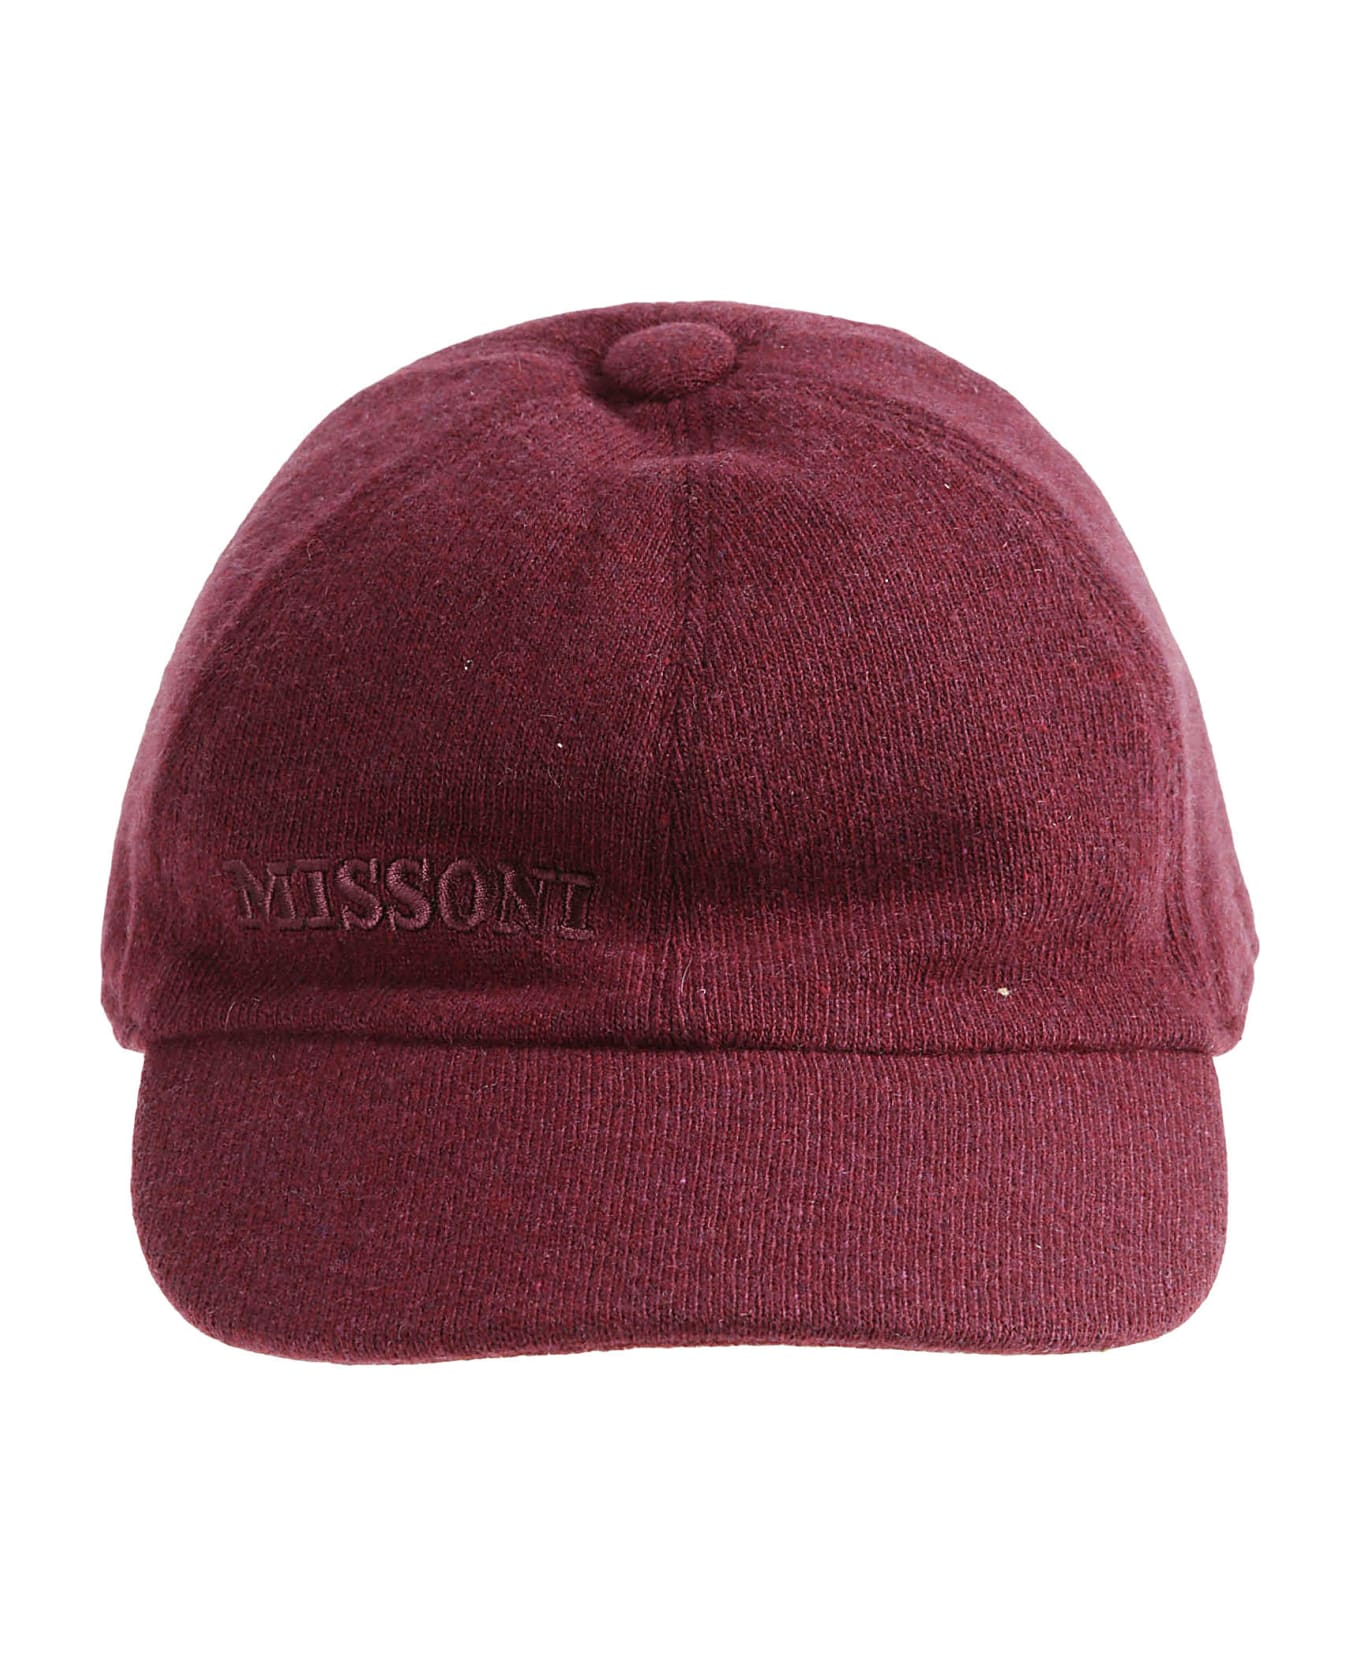 Missoni Hat - Bordeaux 帽子